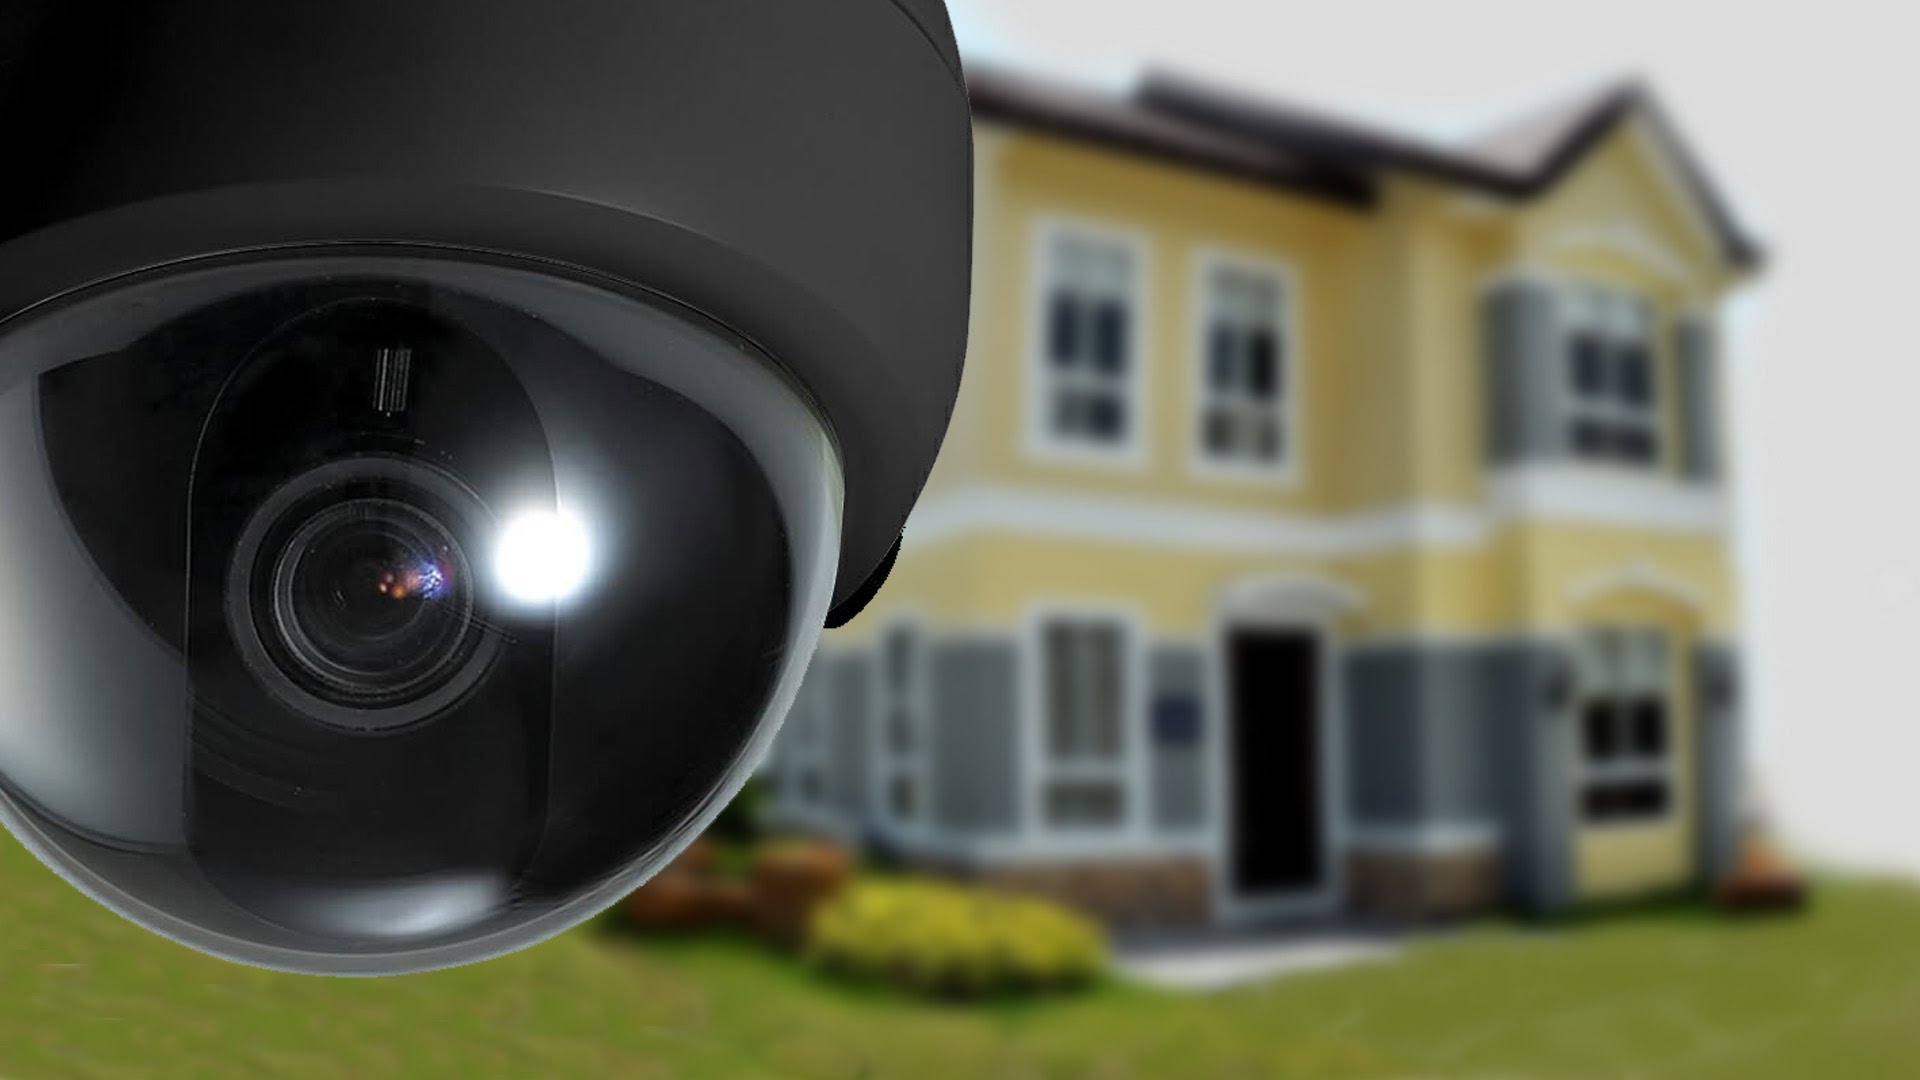 Important Facts about Surveillance Cameras